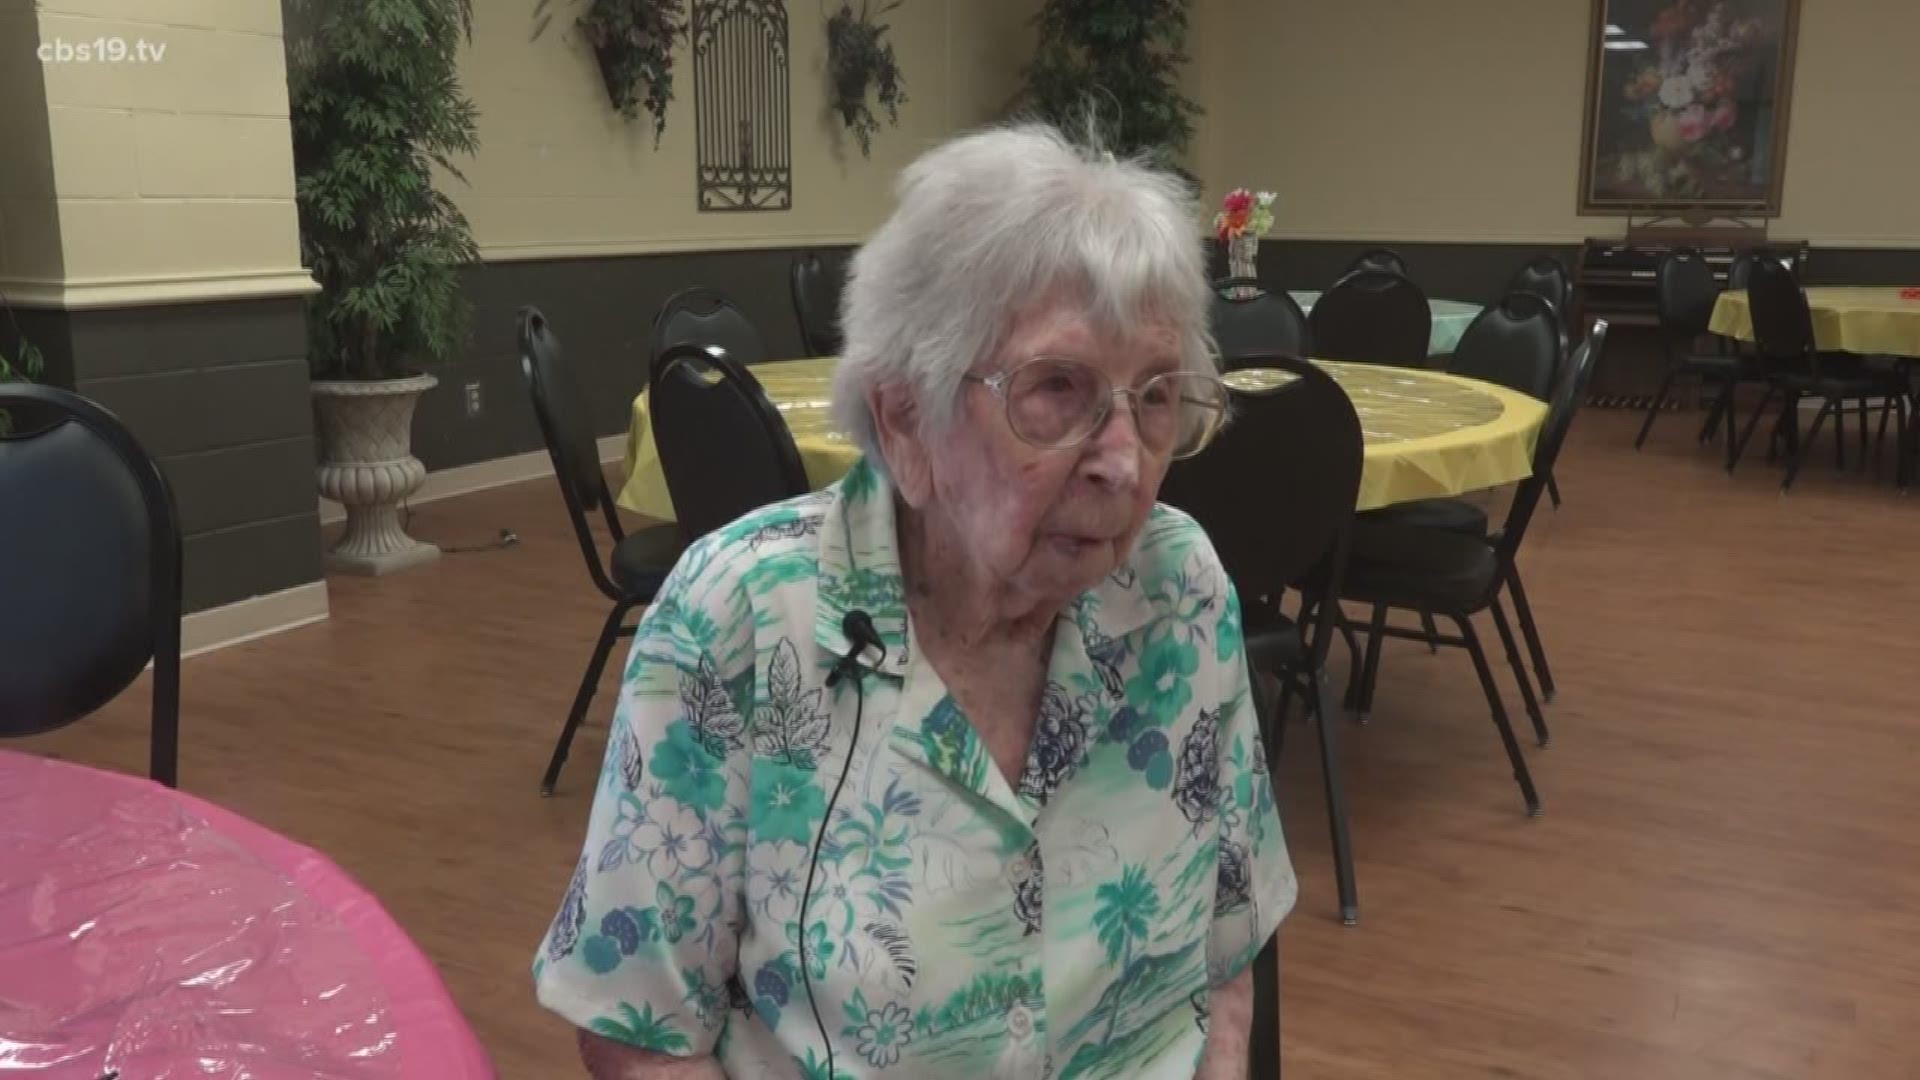 Doris Flood says the key to longevity is daily crossword puzzles